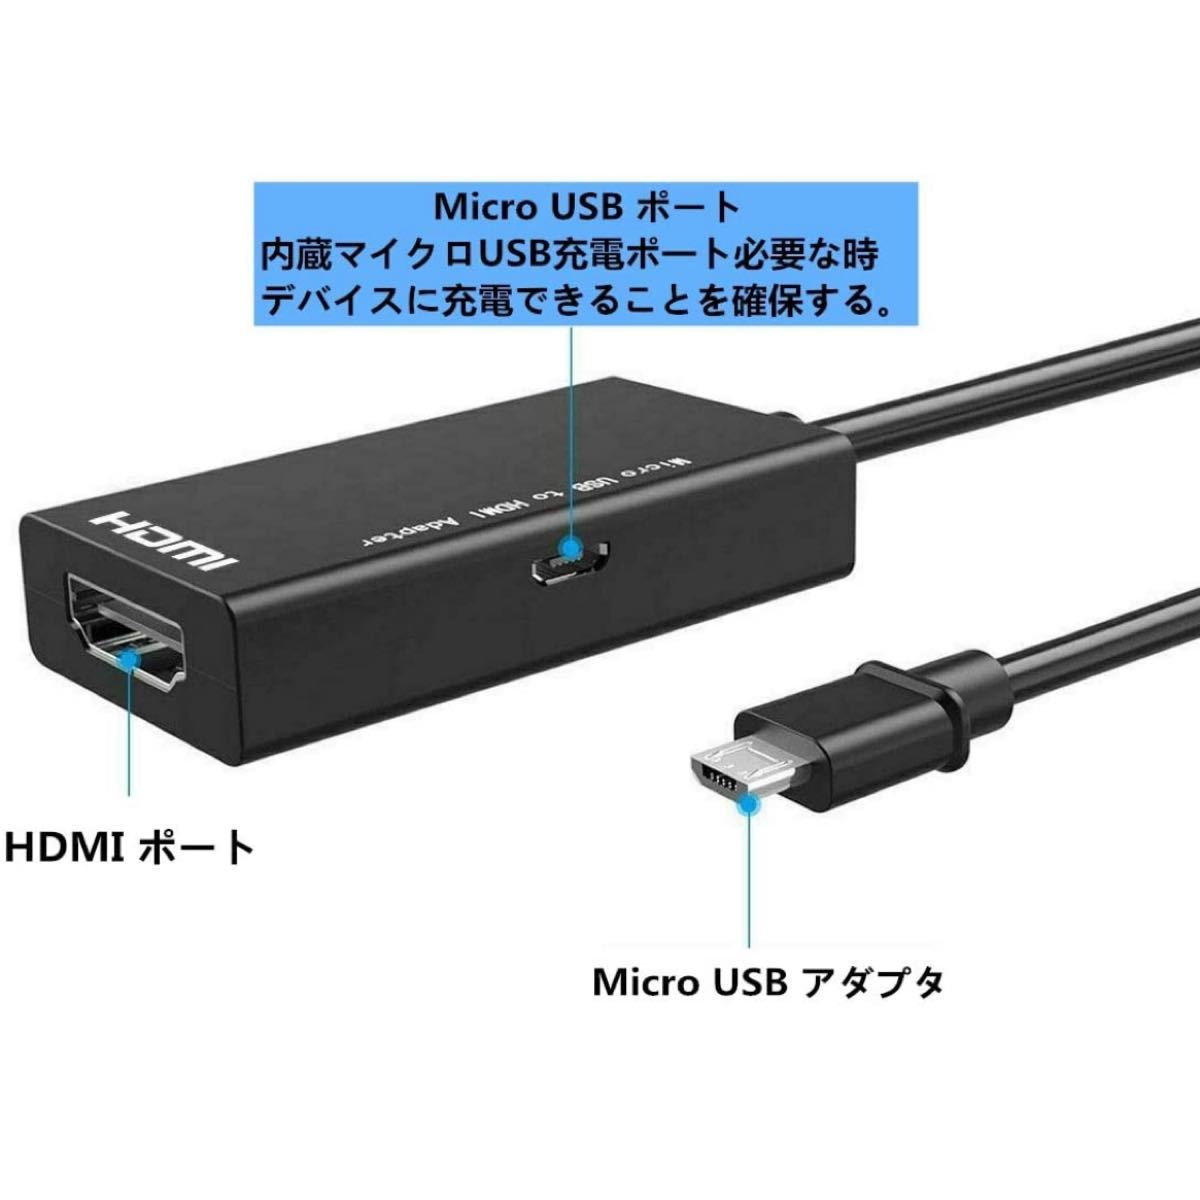 MHL HDMI 変換 アダプタ Micro USB to HDMI 接続アダプタ 変換ケーブル テレビ映像転送 1080P対応